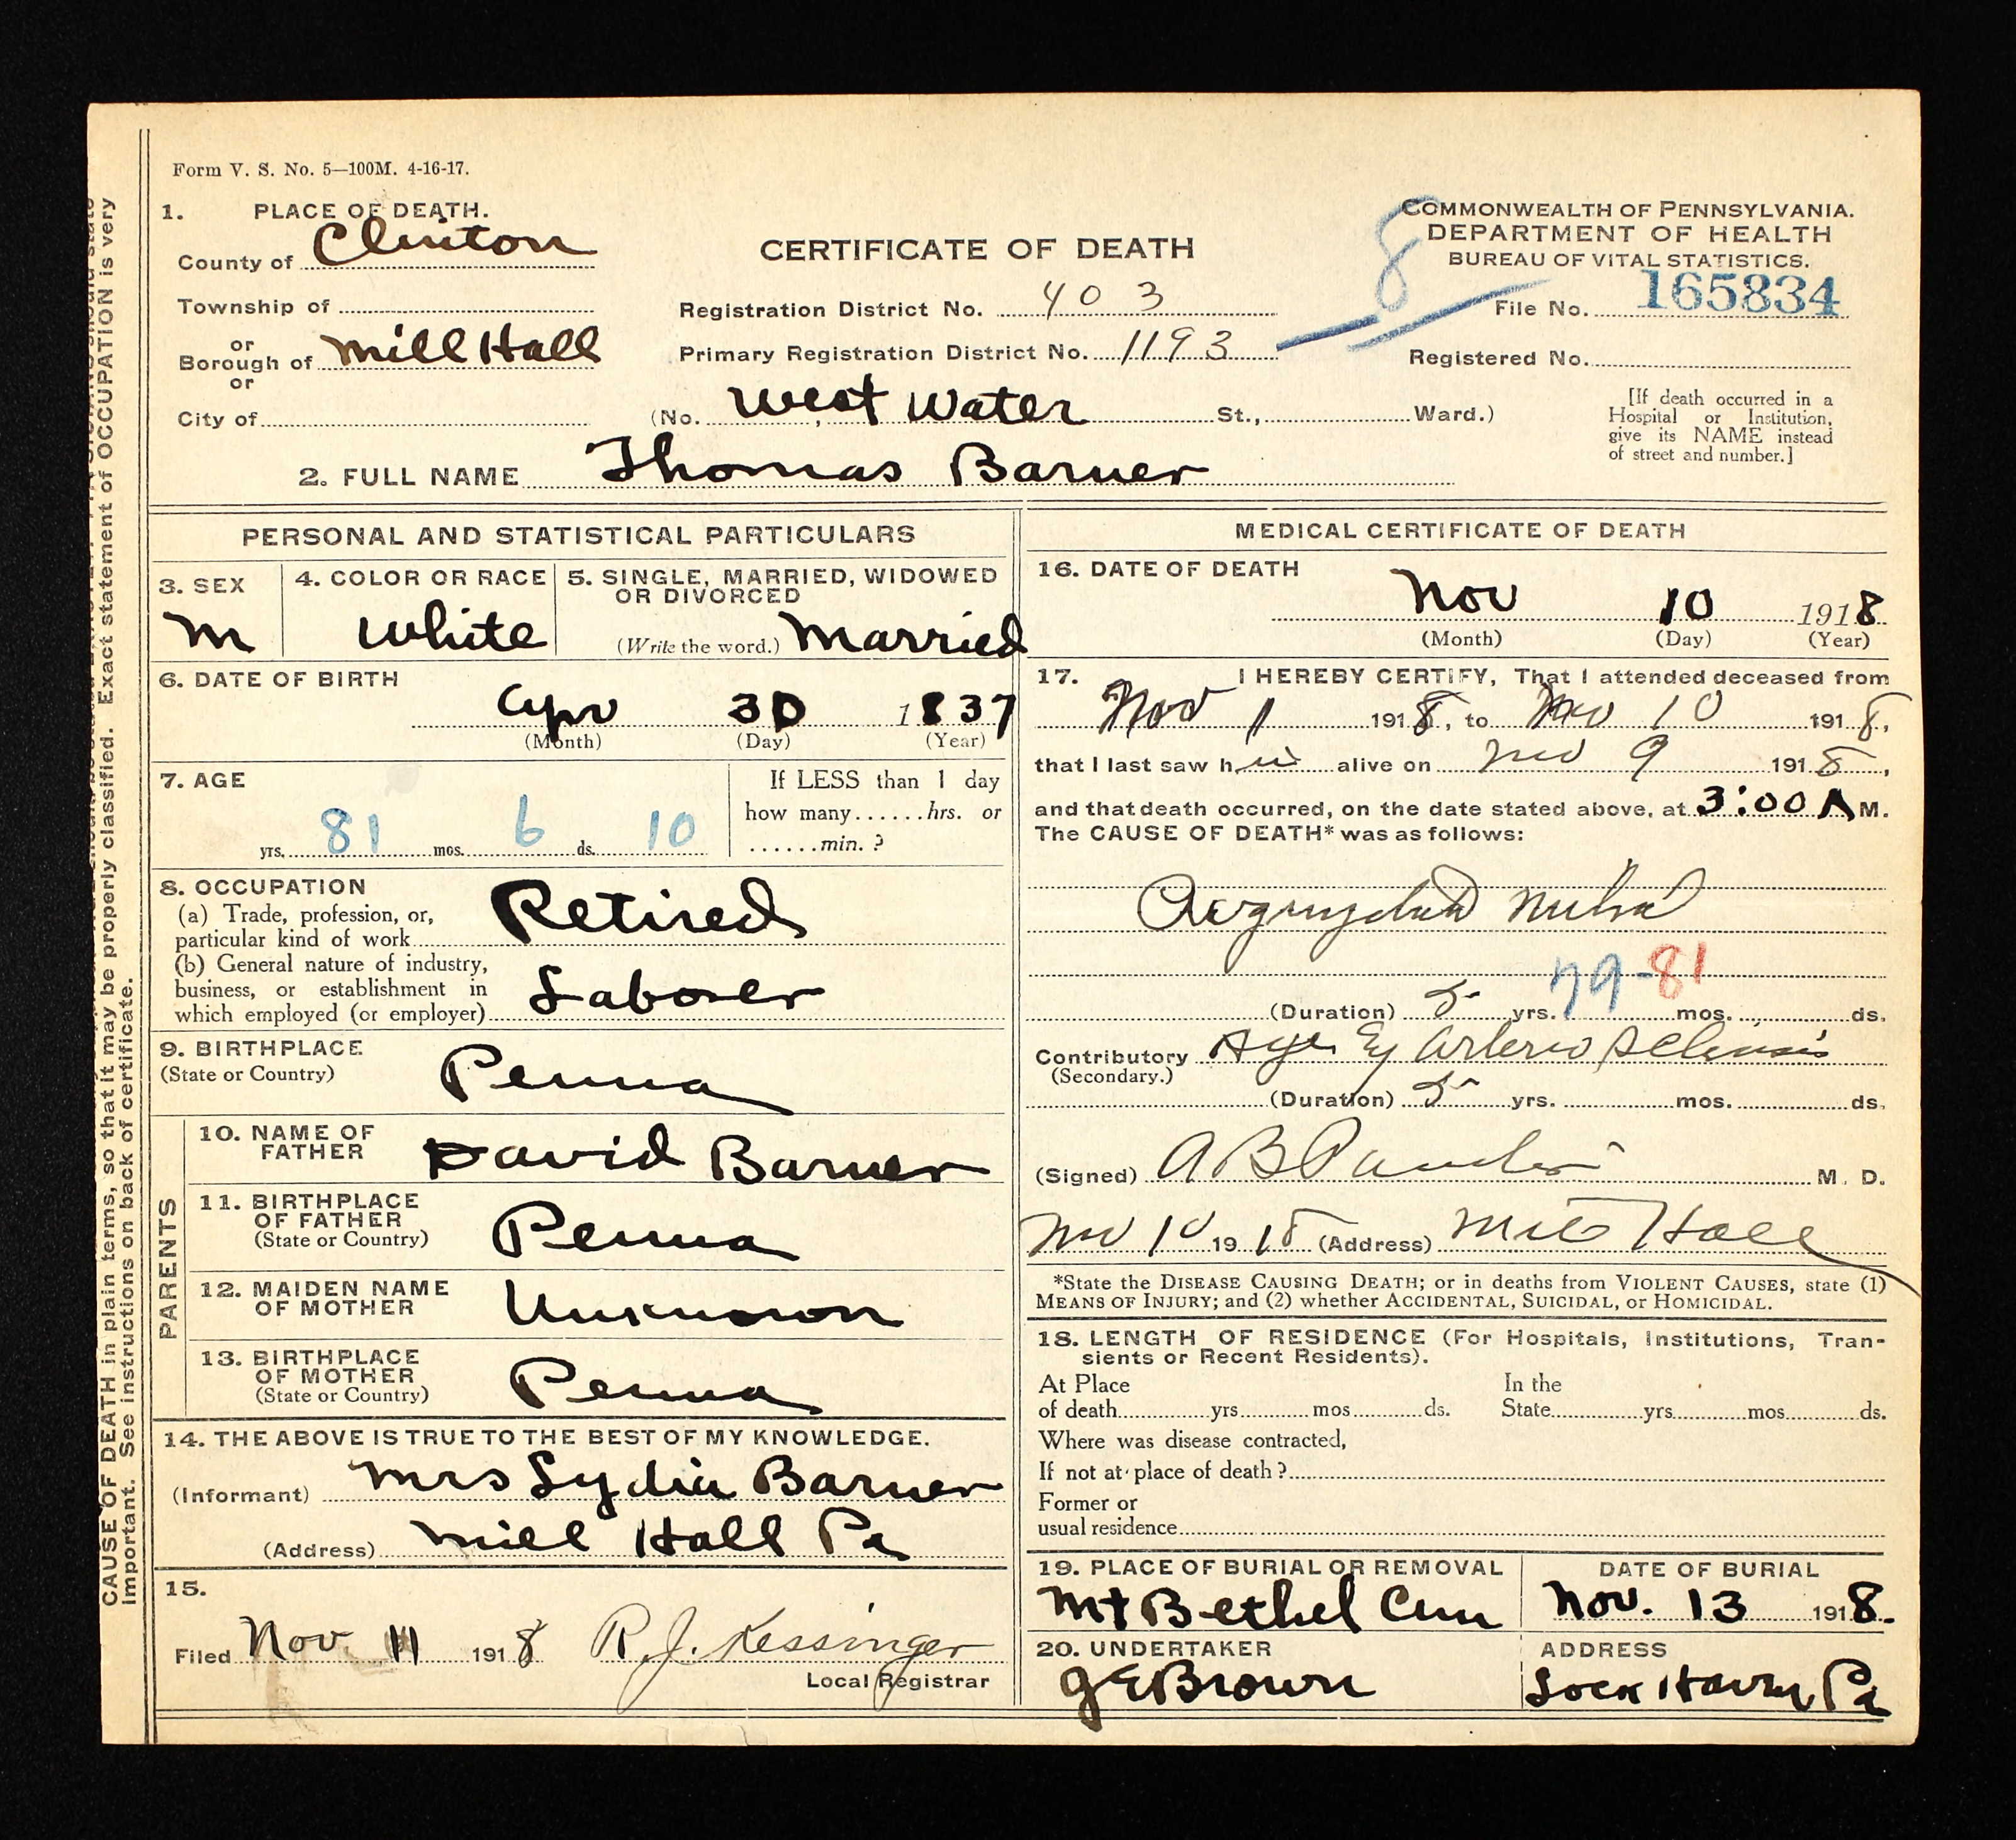 Thomas Barner death certificate